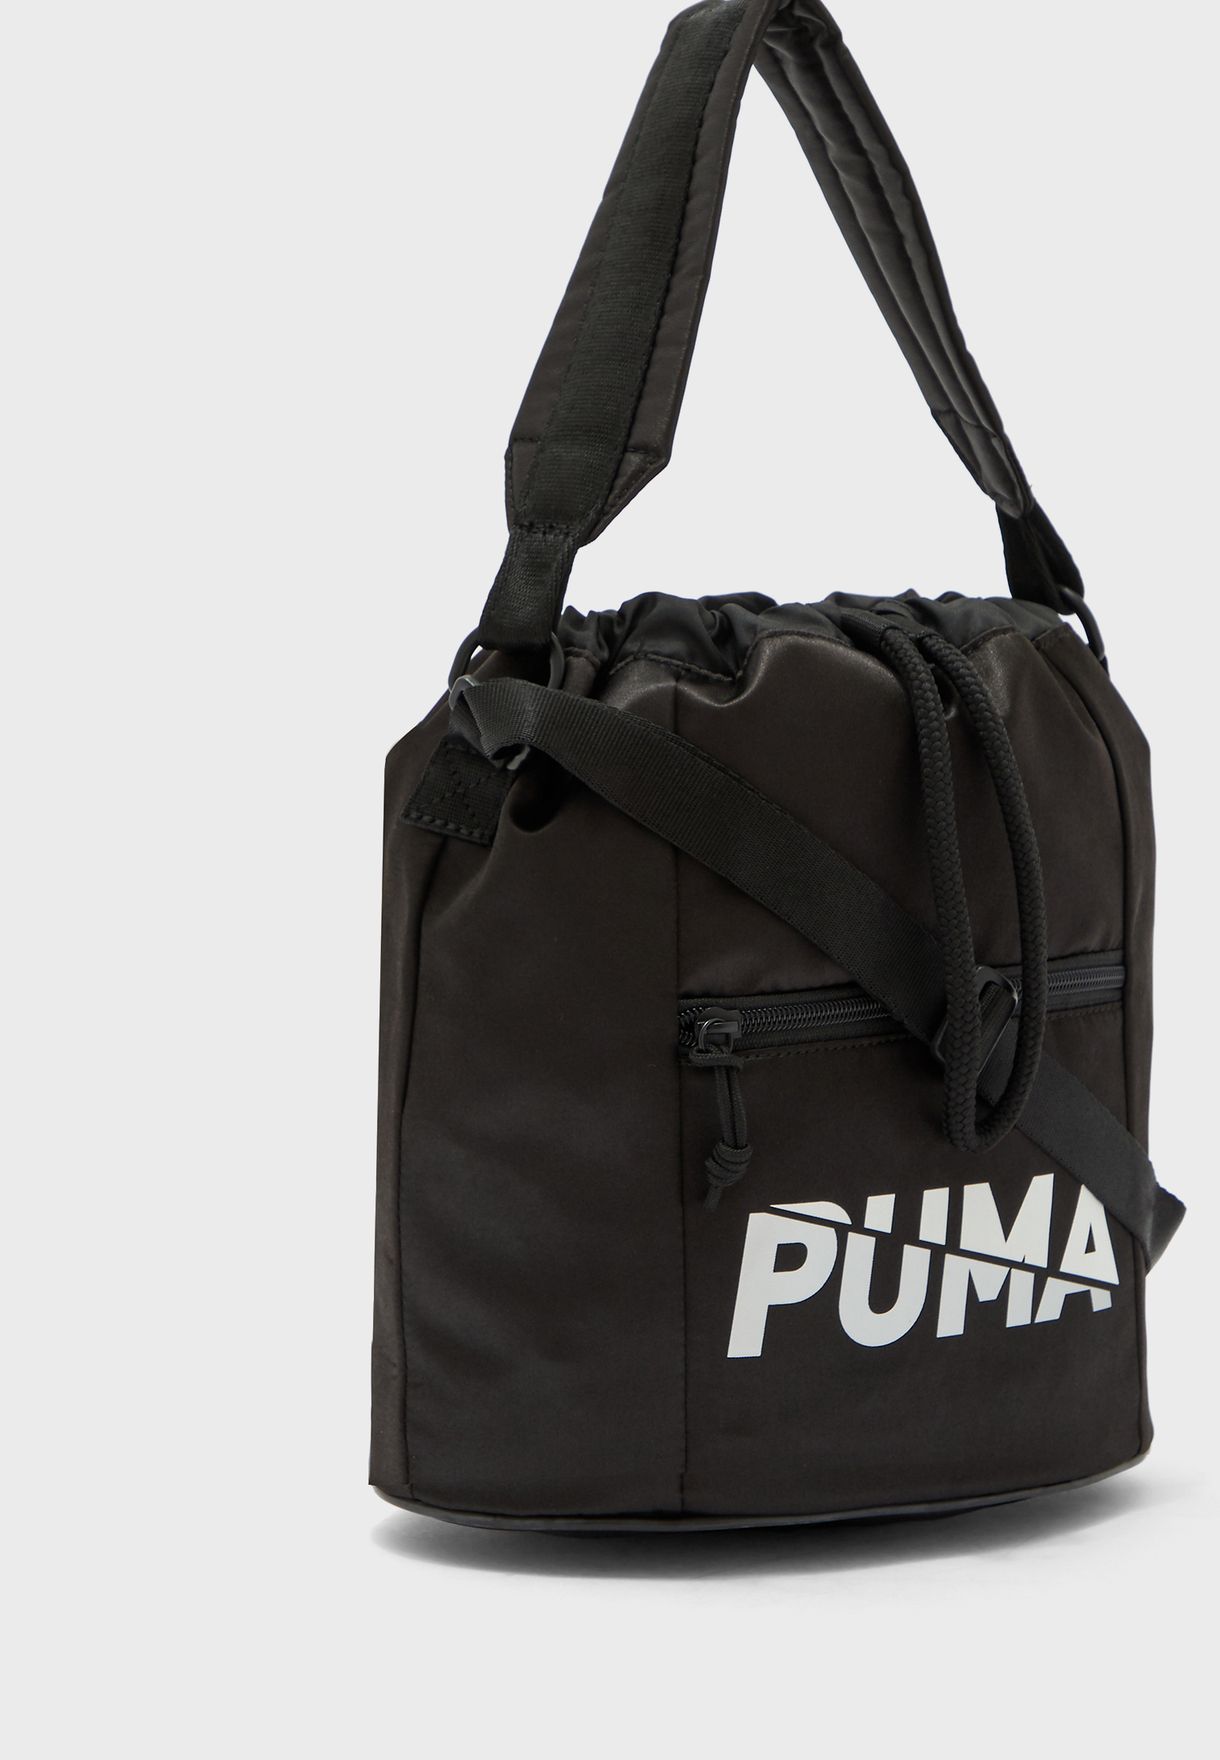 puma bags under 300